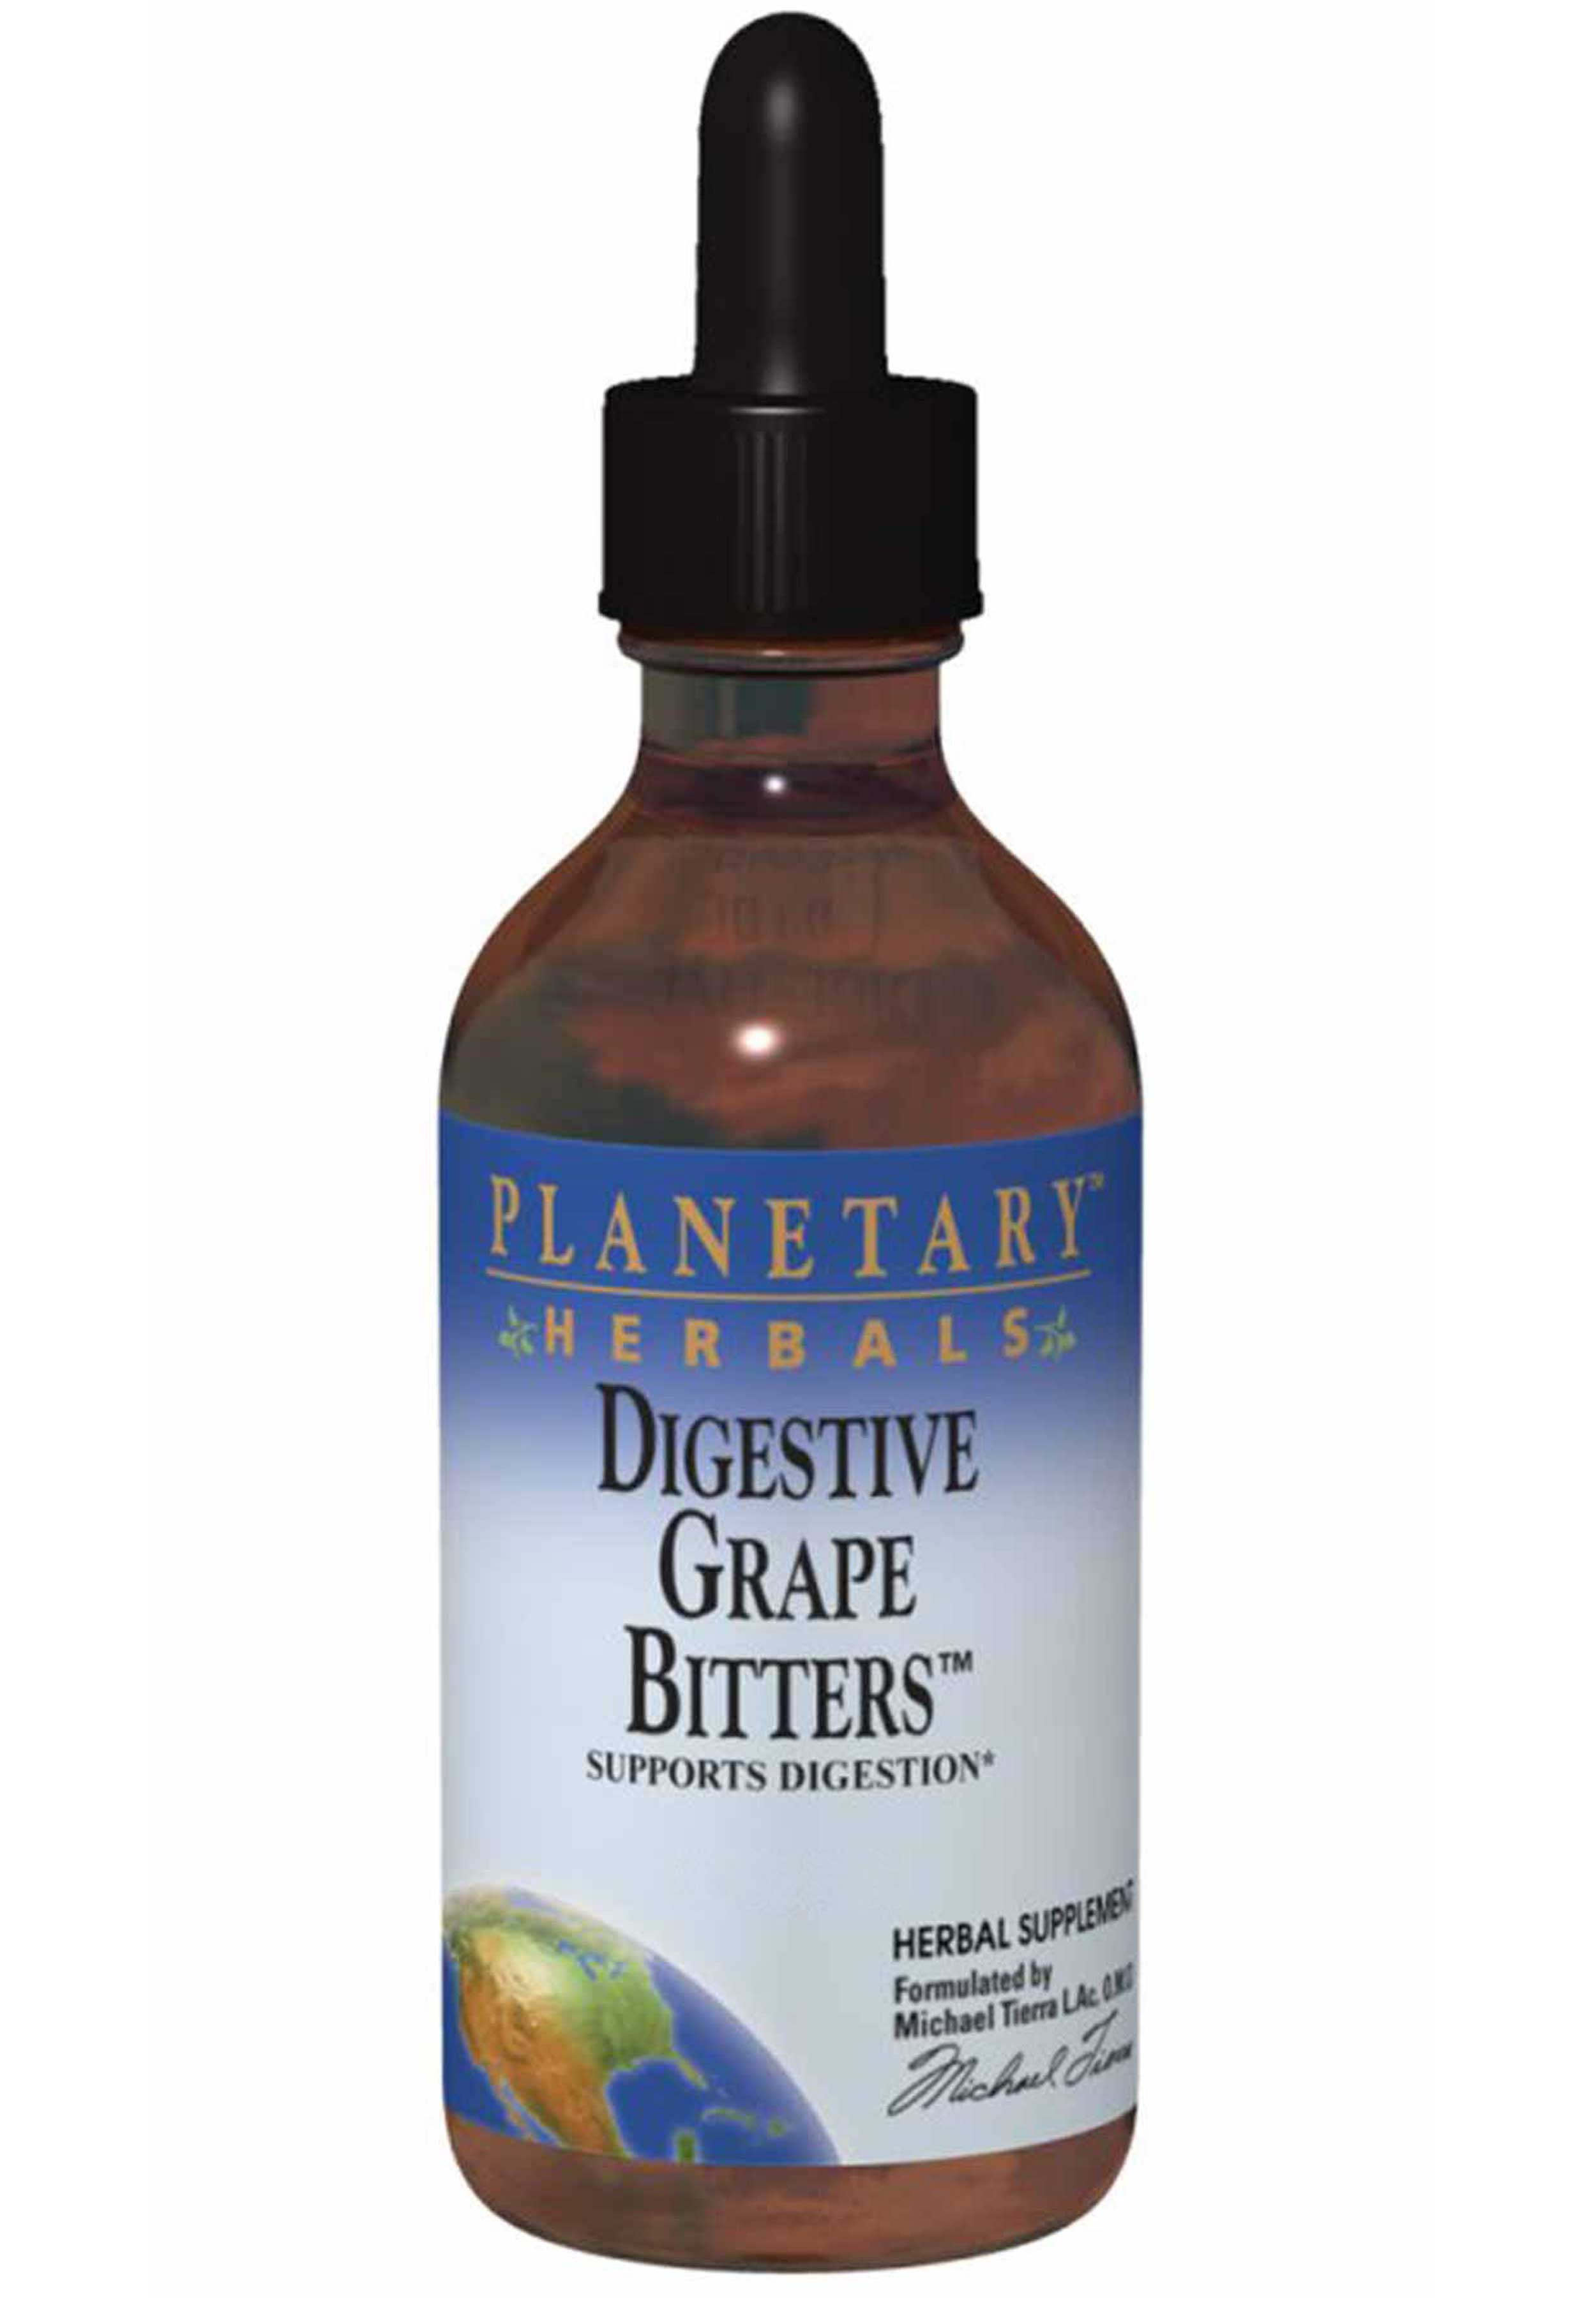 Planetary Herbals Digestive Grape Bitters™